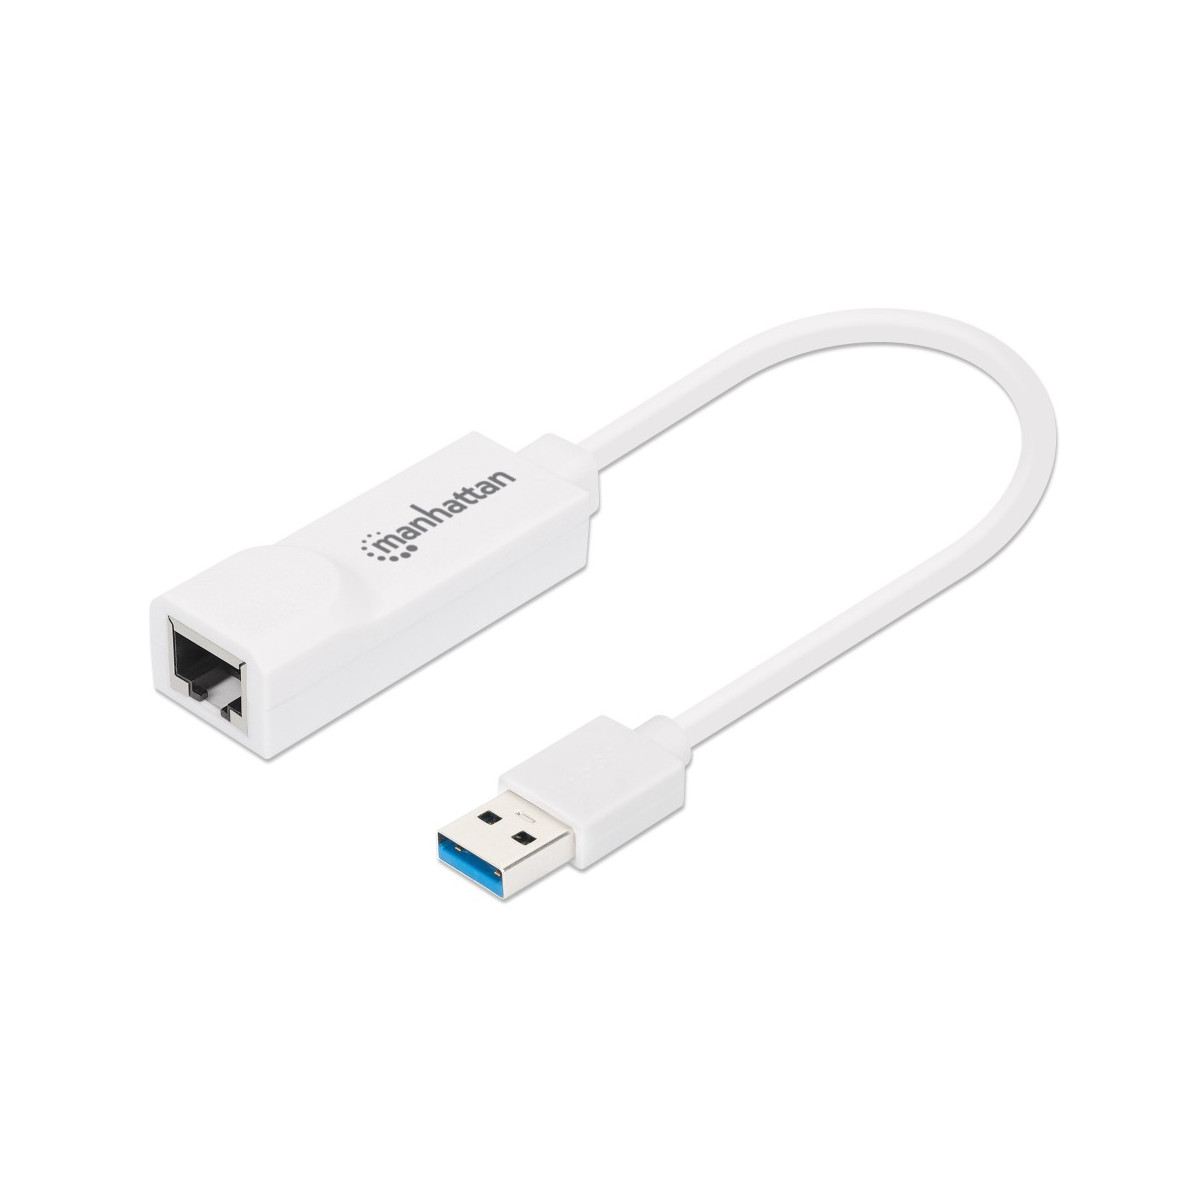 Adattatore interfaccia USB 3.0 con porta Ethernet LAN 1Gbps